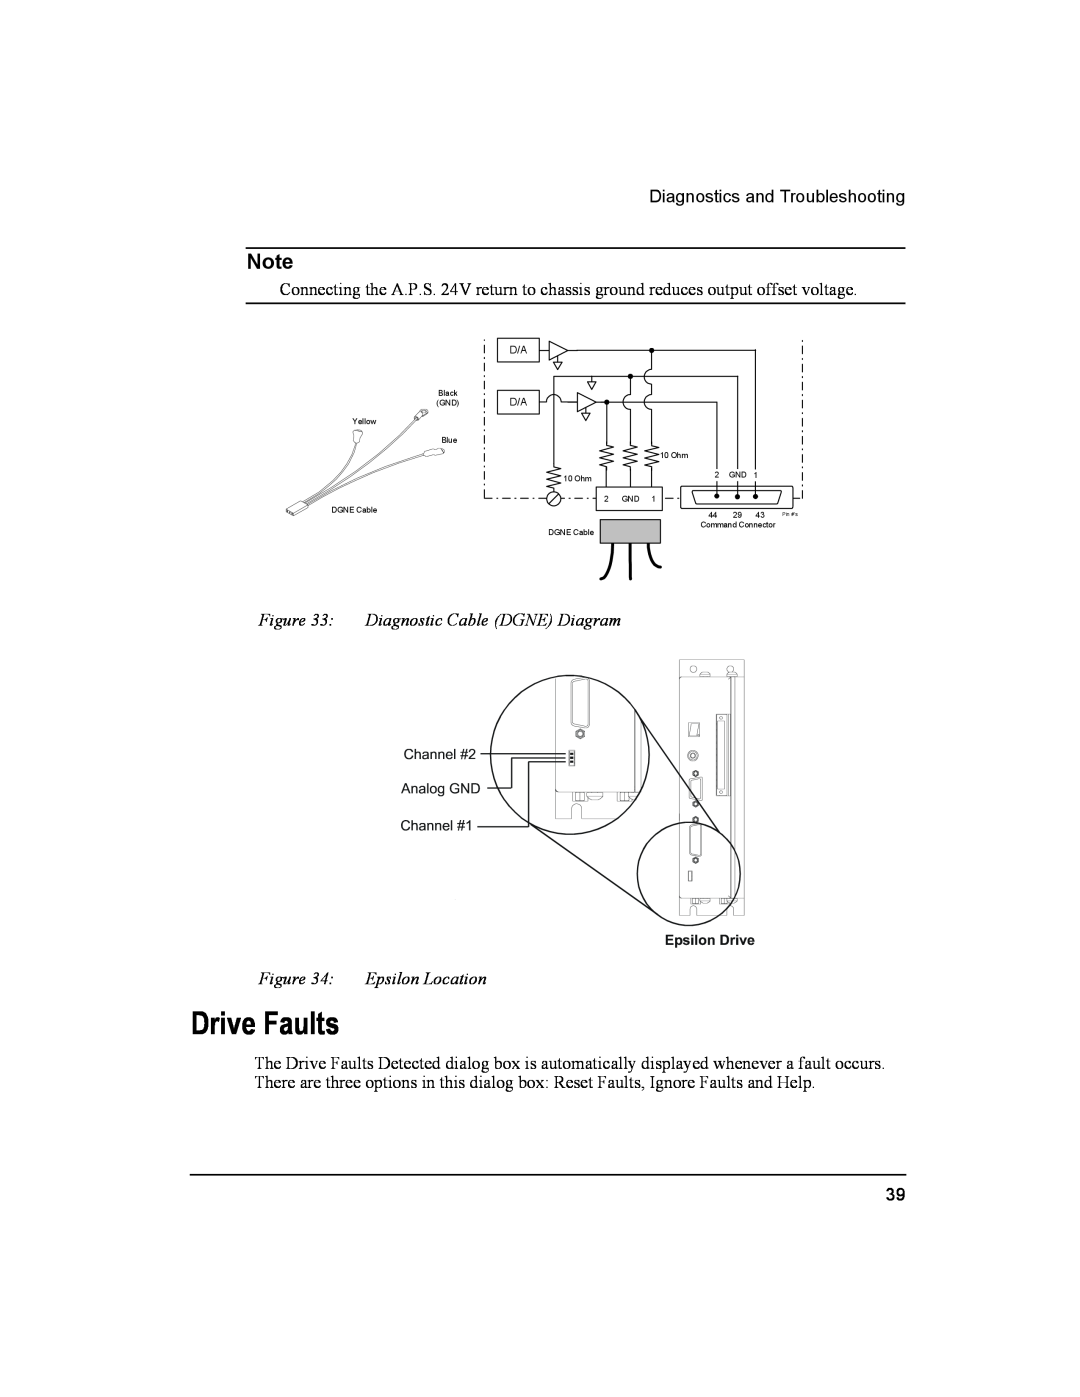 Emerson Epsilon Eb Digital Servo Drive, 400501-05 Drive Faults, Diagnostic Cable DGNE Diagram Epsilon Location 